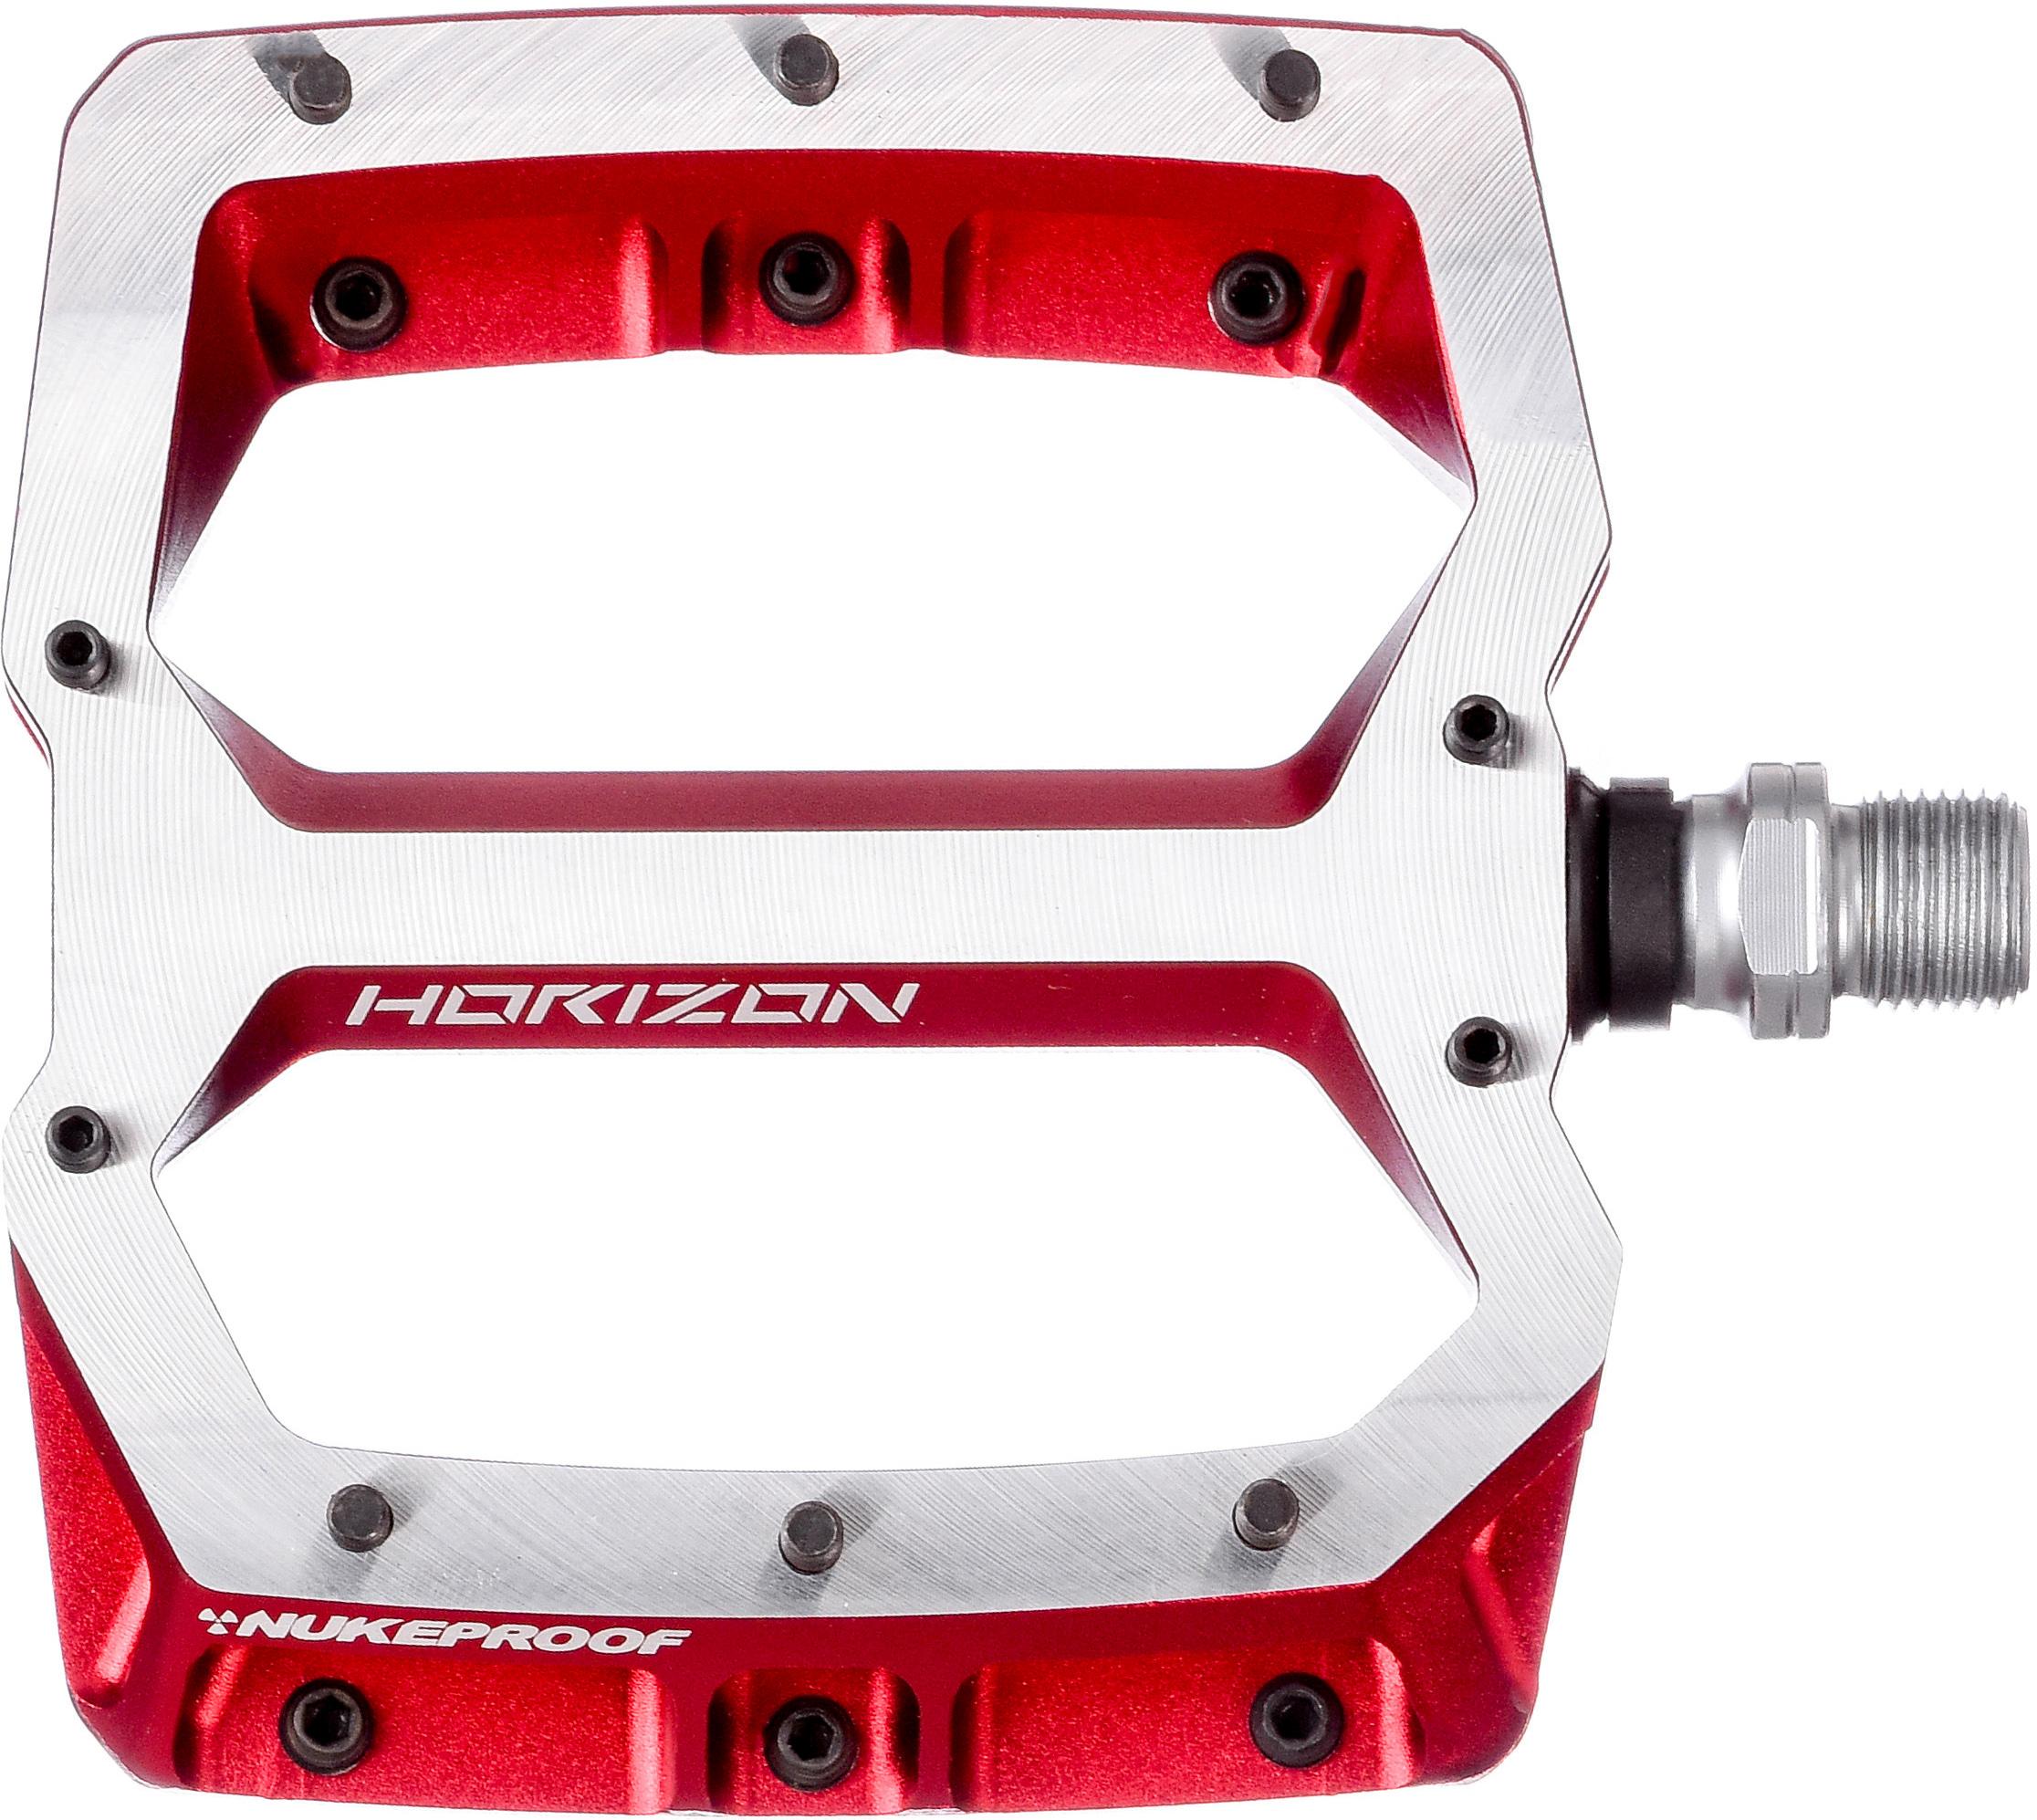 Nukeproof Horizon Pro Downhill Flat Pedals - Red